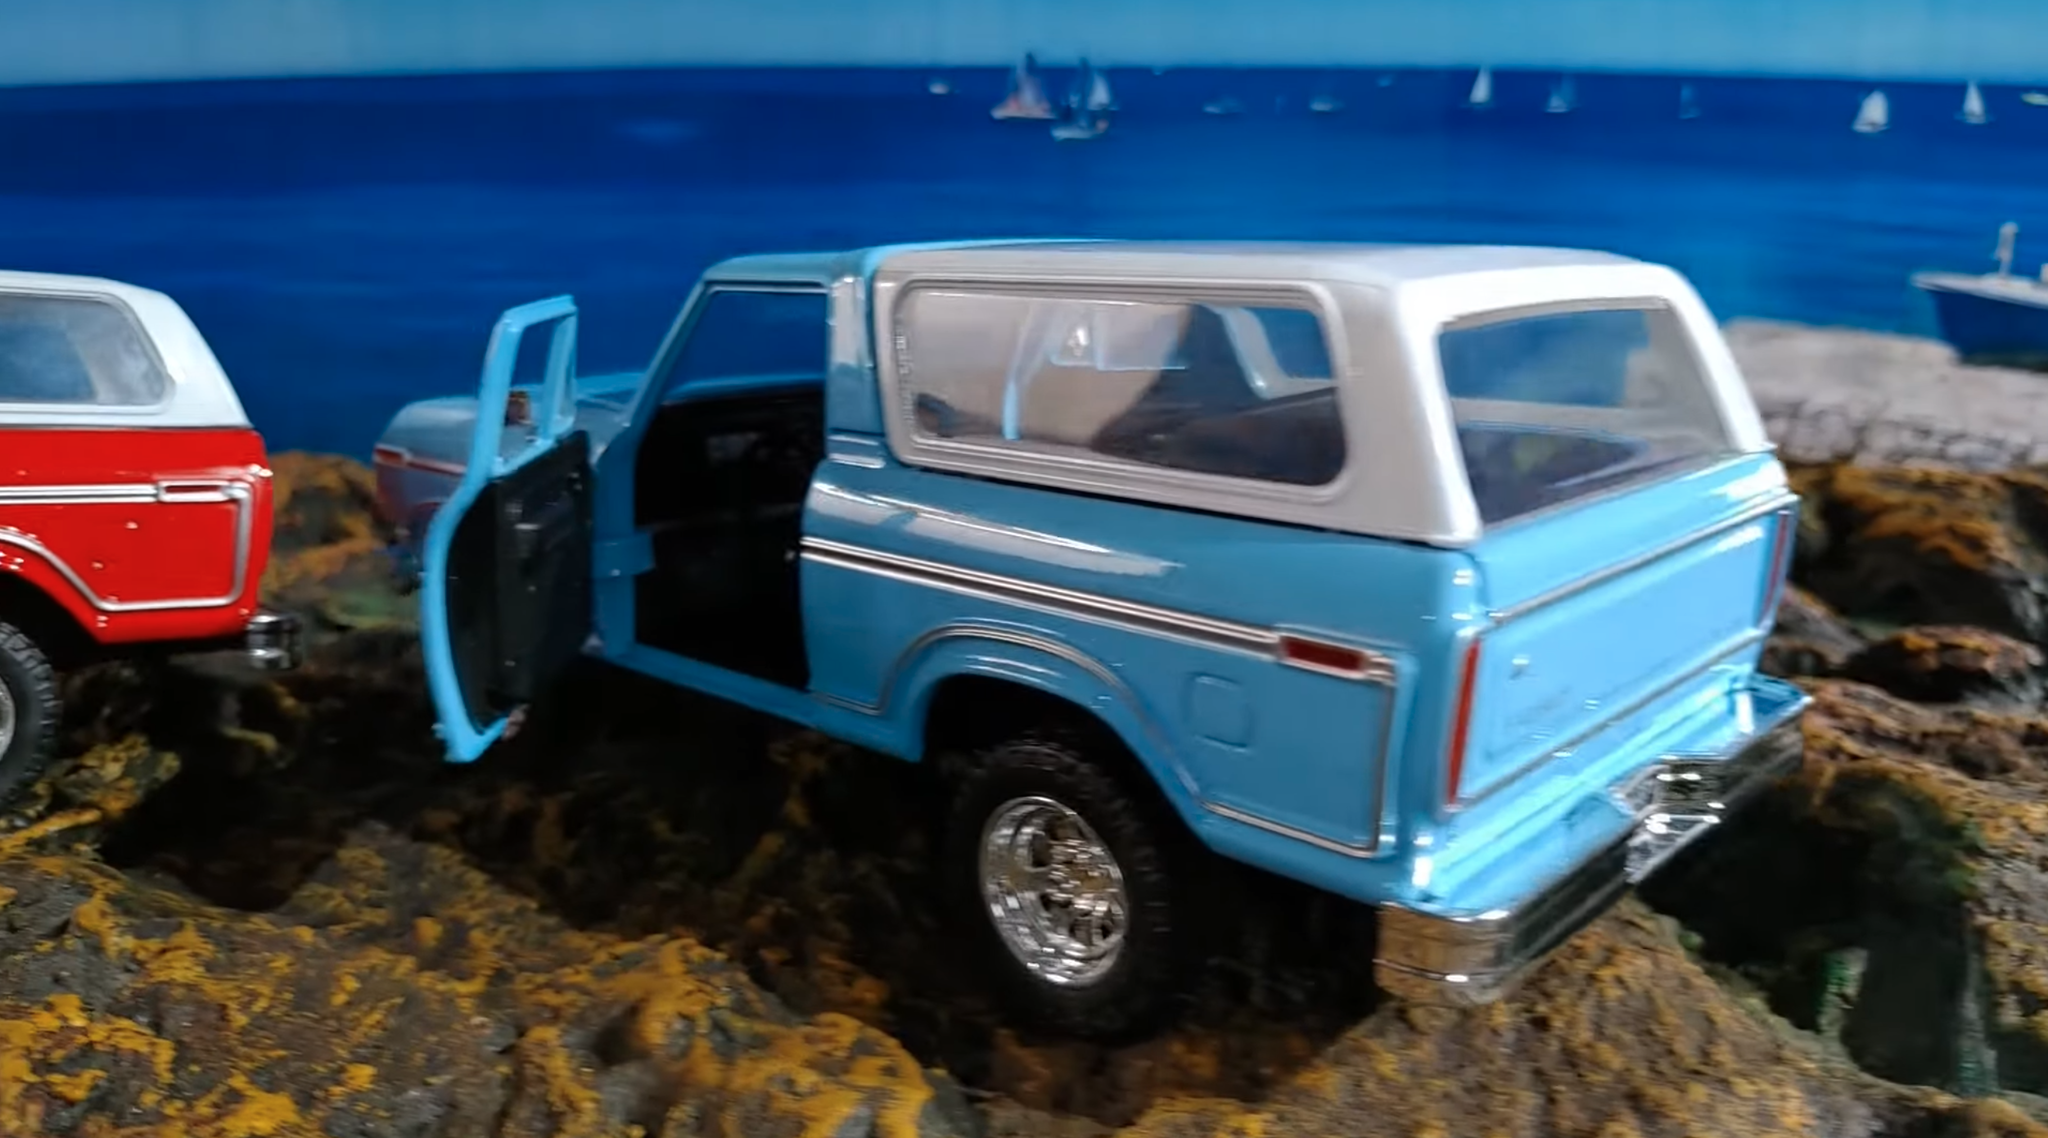 Skala 1/24 Ford Bronco 78', Ljusblå m avtagbar kåpa fr Timeless Legends - MotorMax